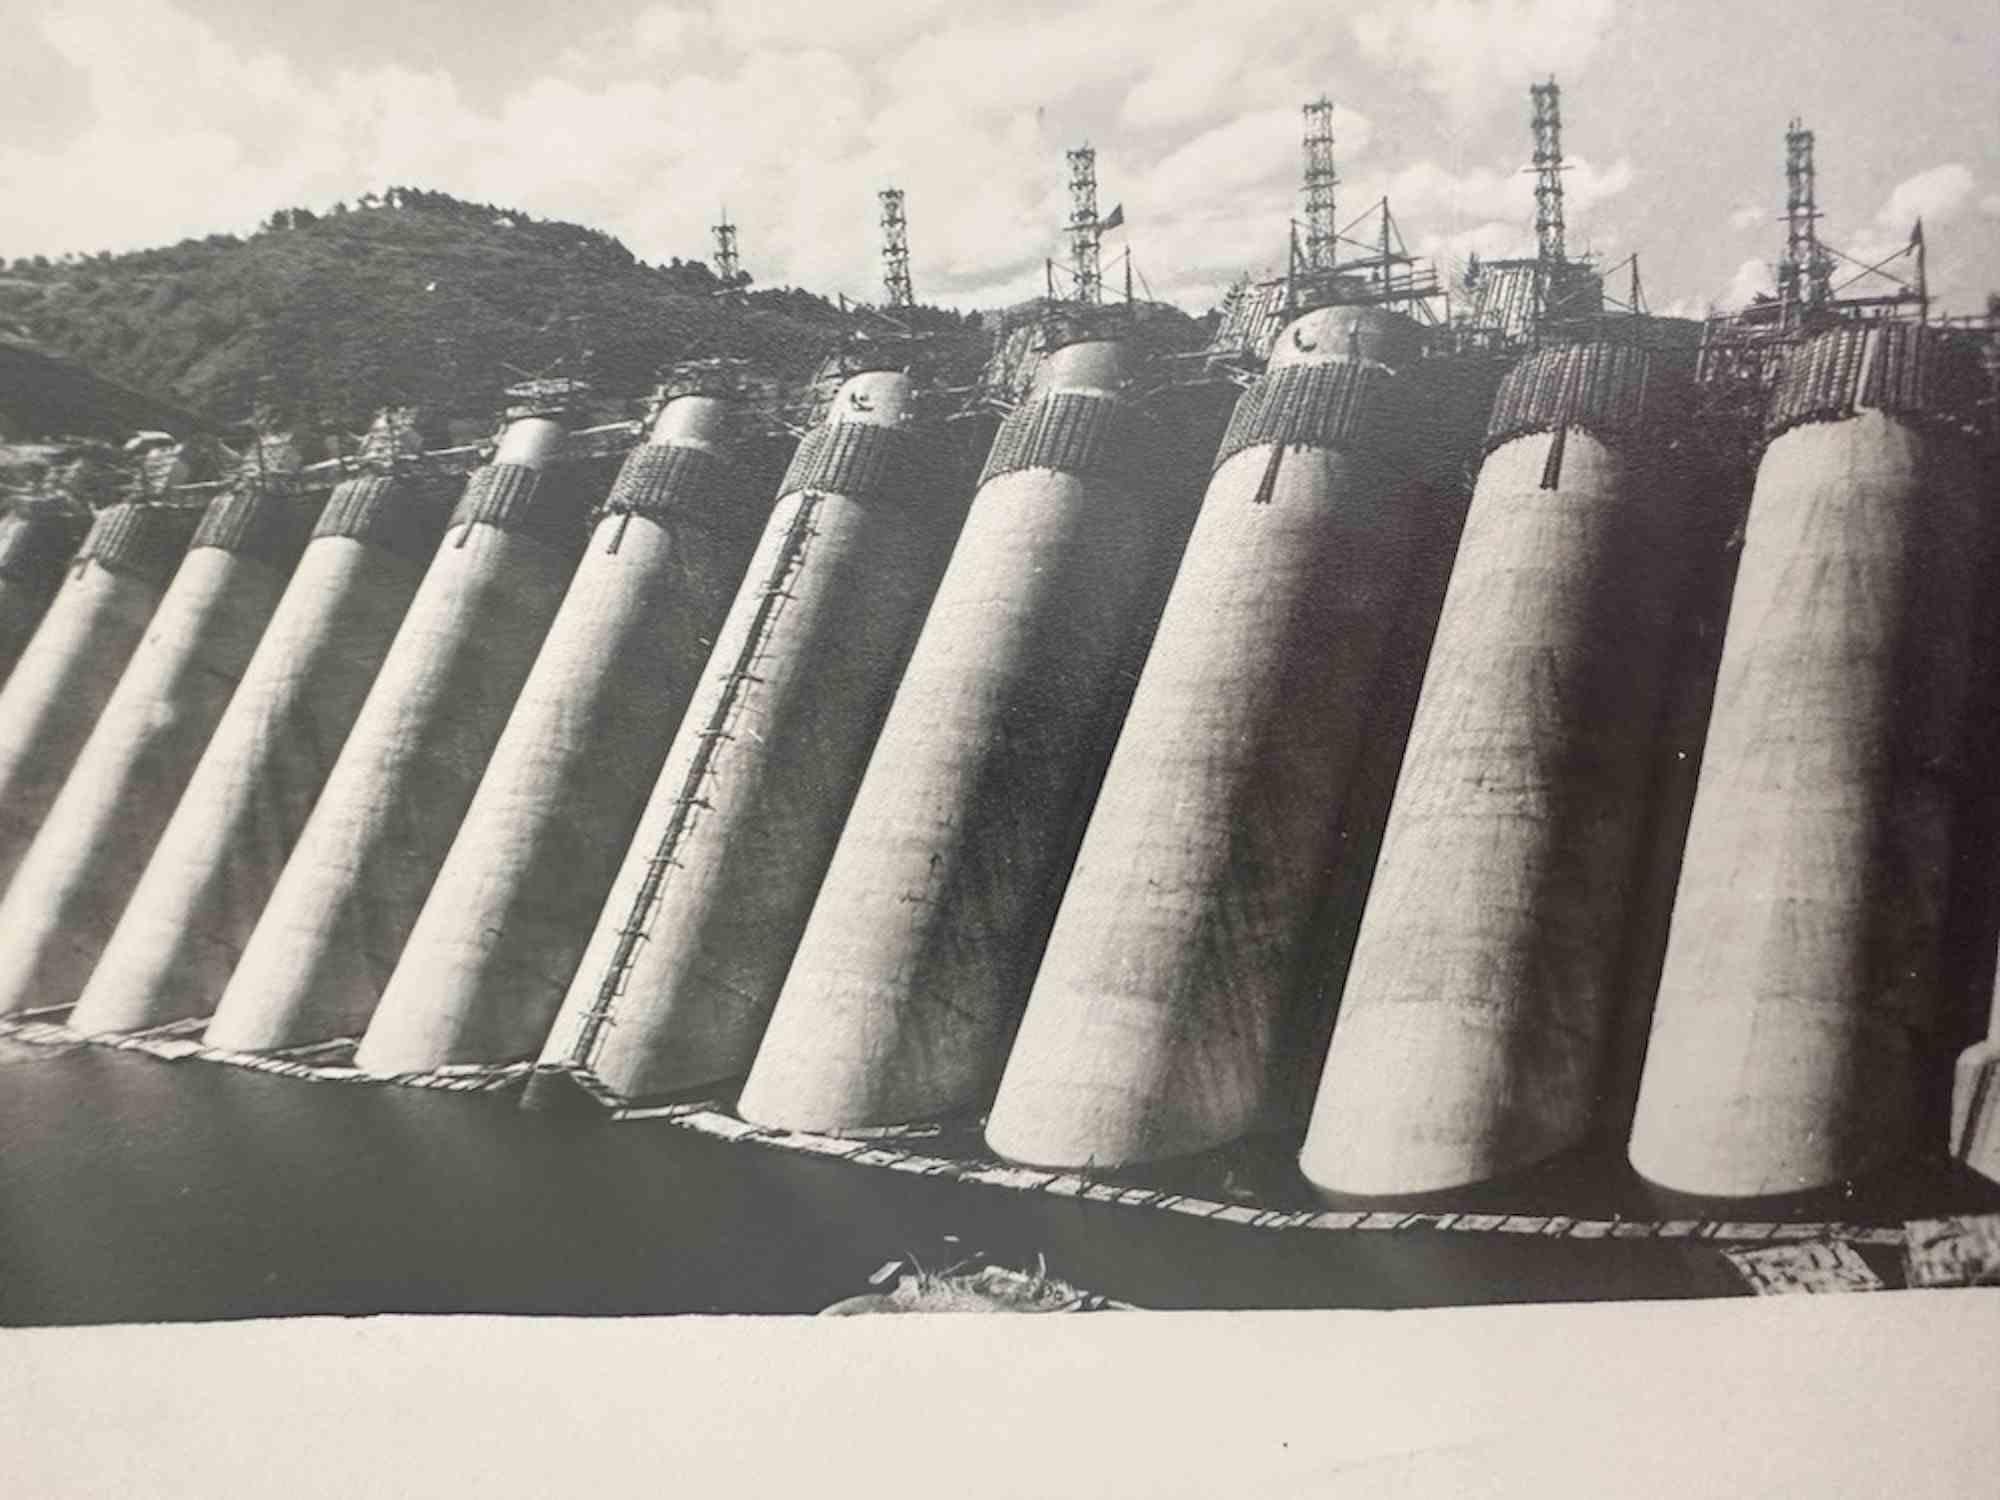 Unknown Figurative Photograph - Historical Photo - Dam - Vintage Photo - Mid-20th Century